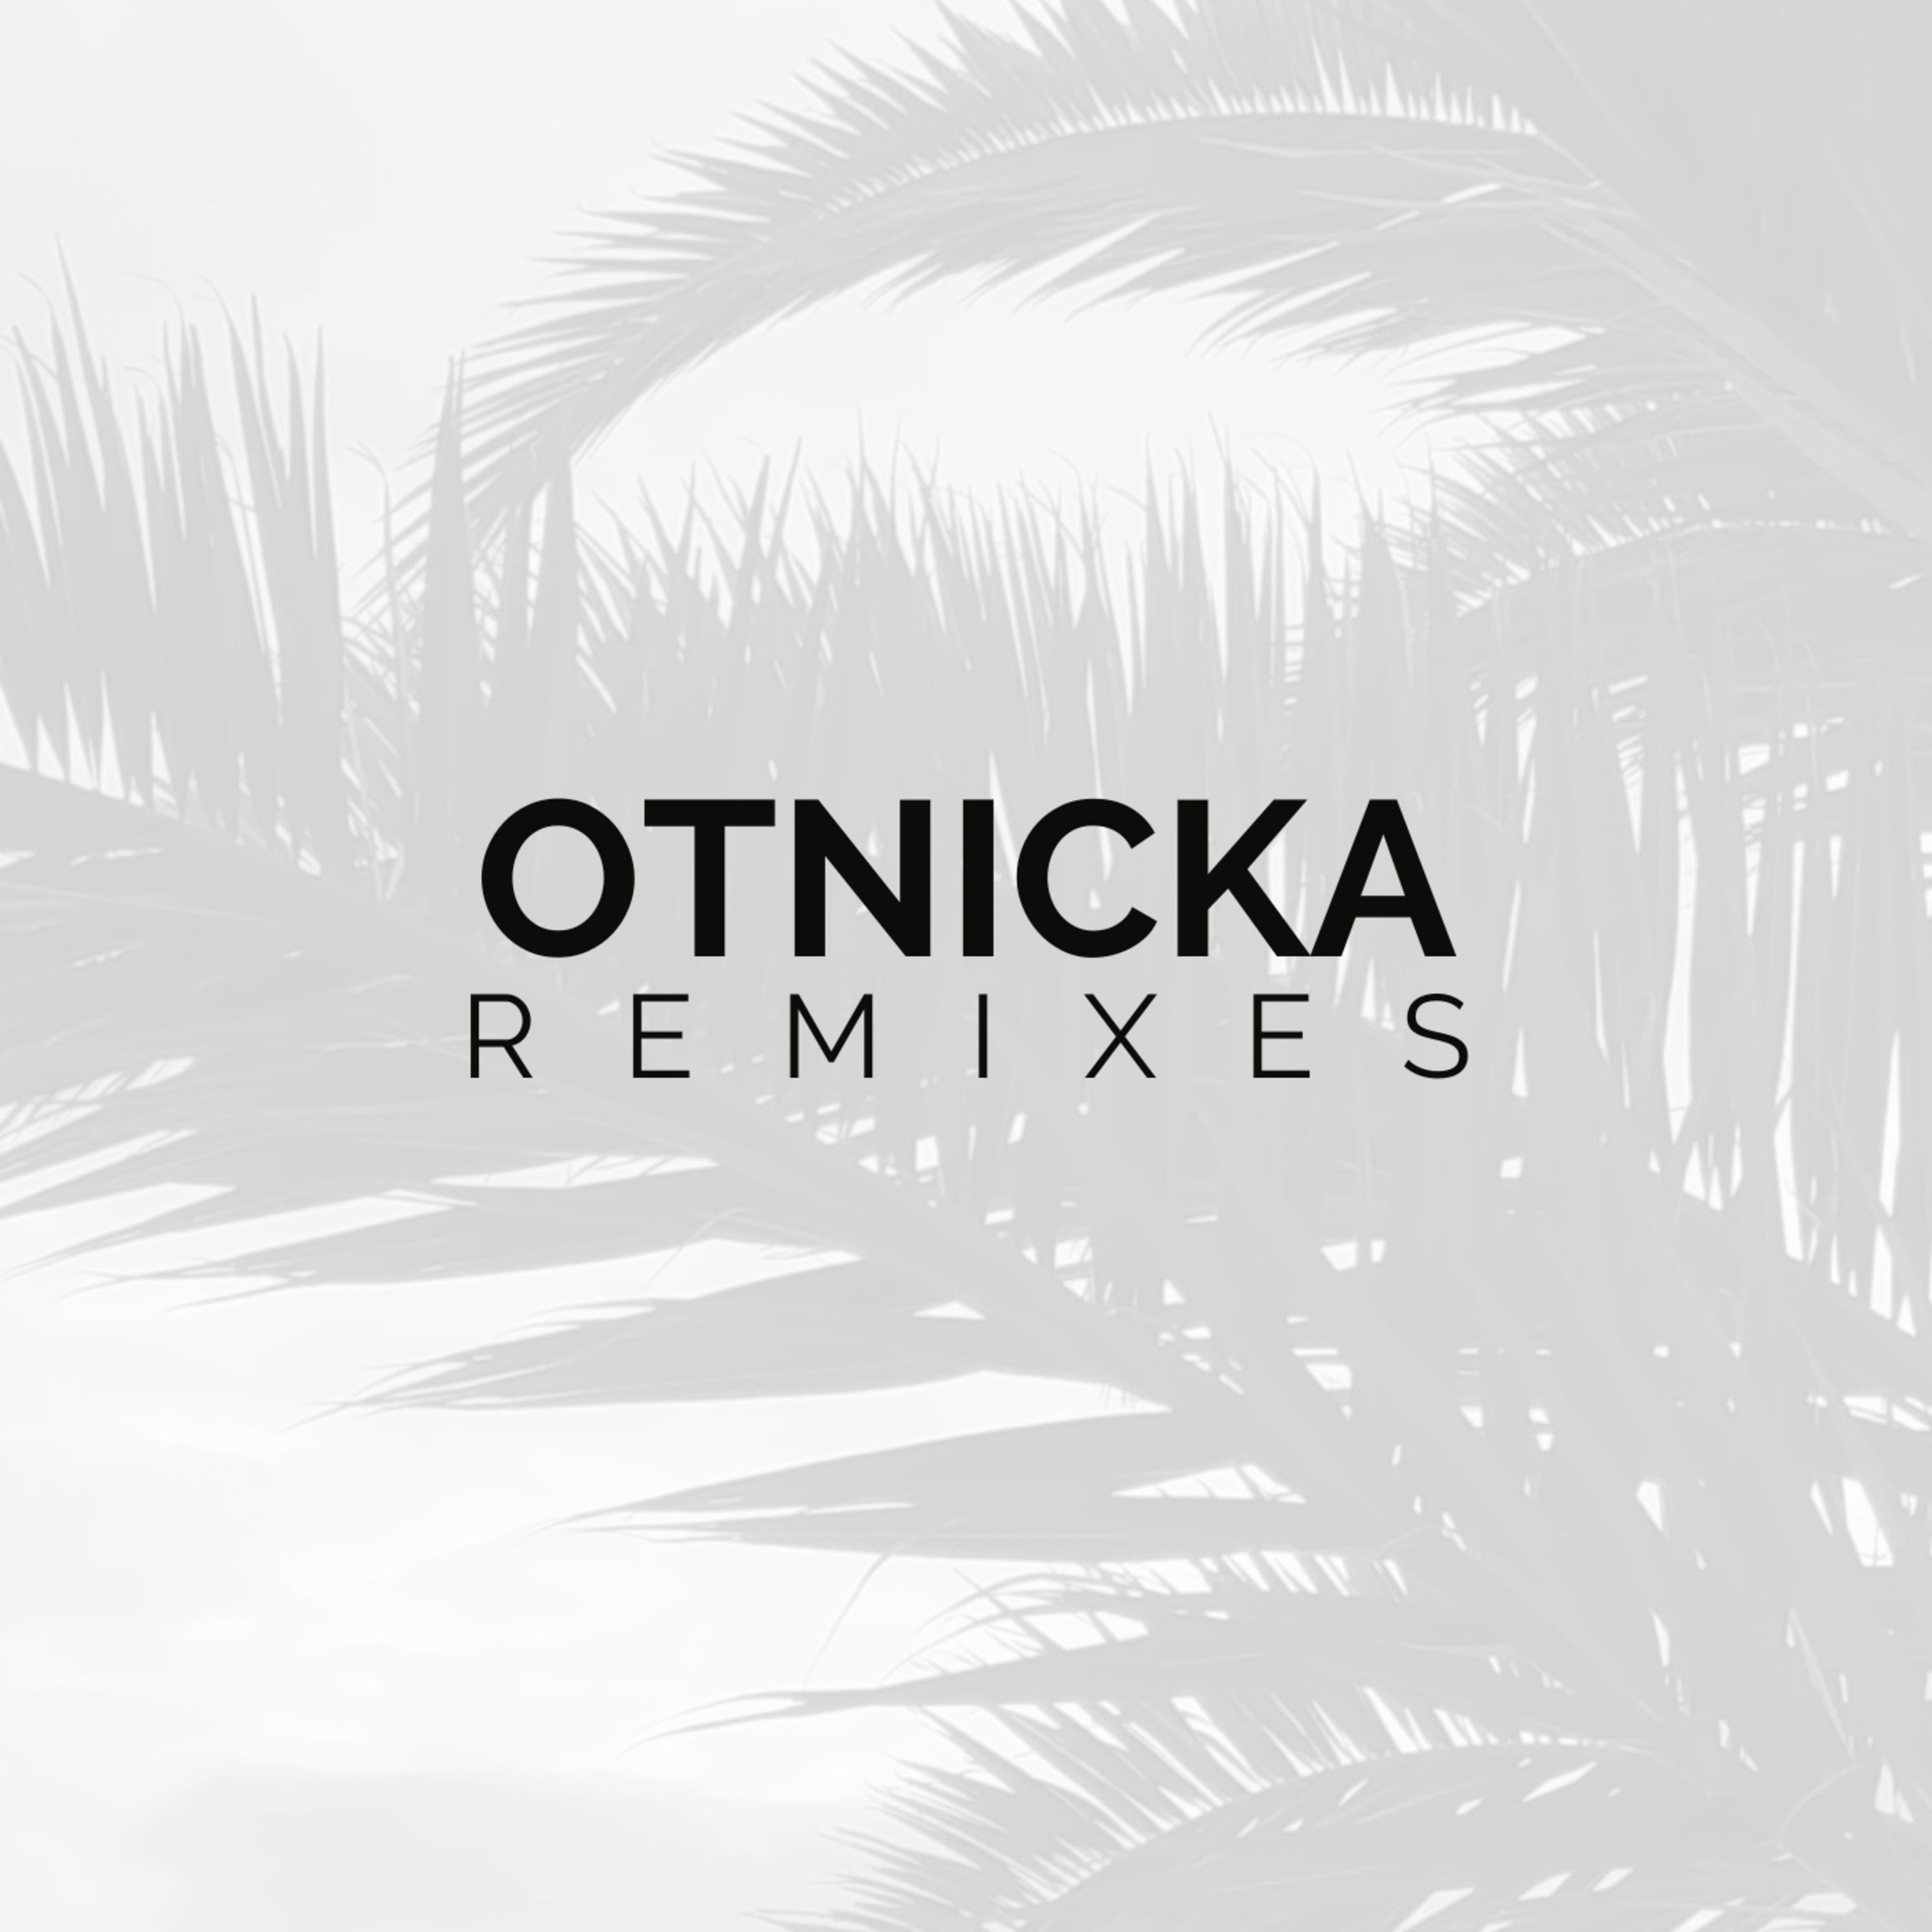 डाउनलोड करा Otnicka - Sorry (Daytonite Remix)